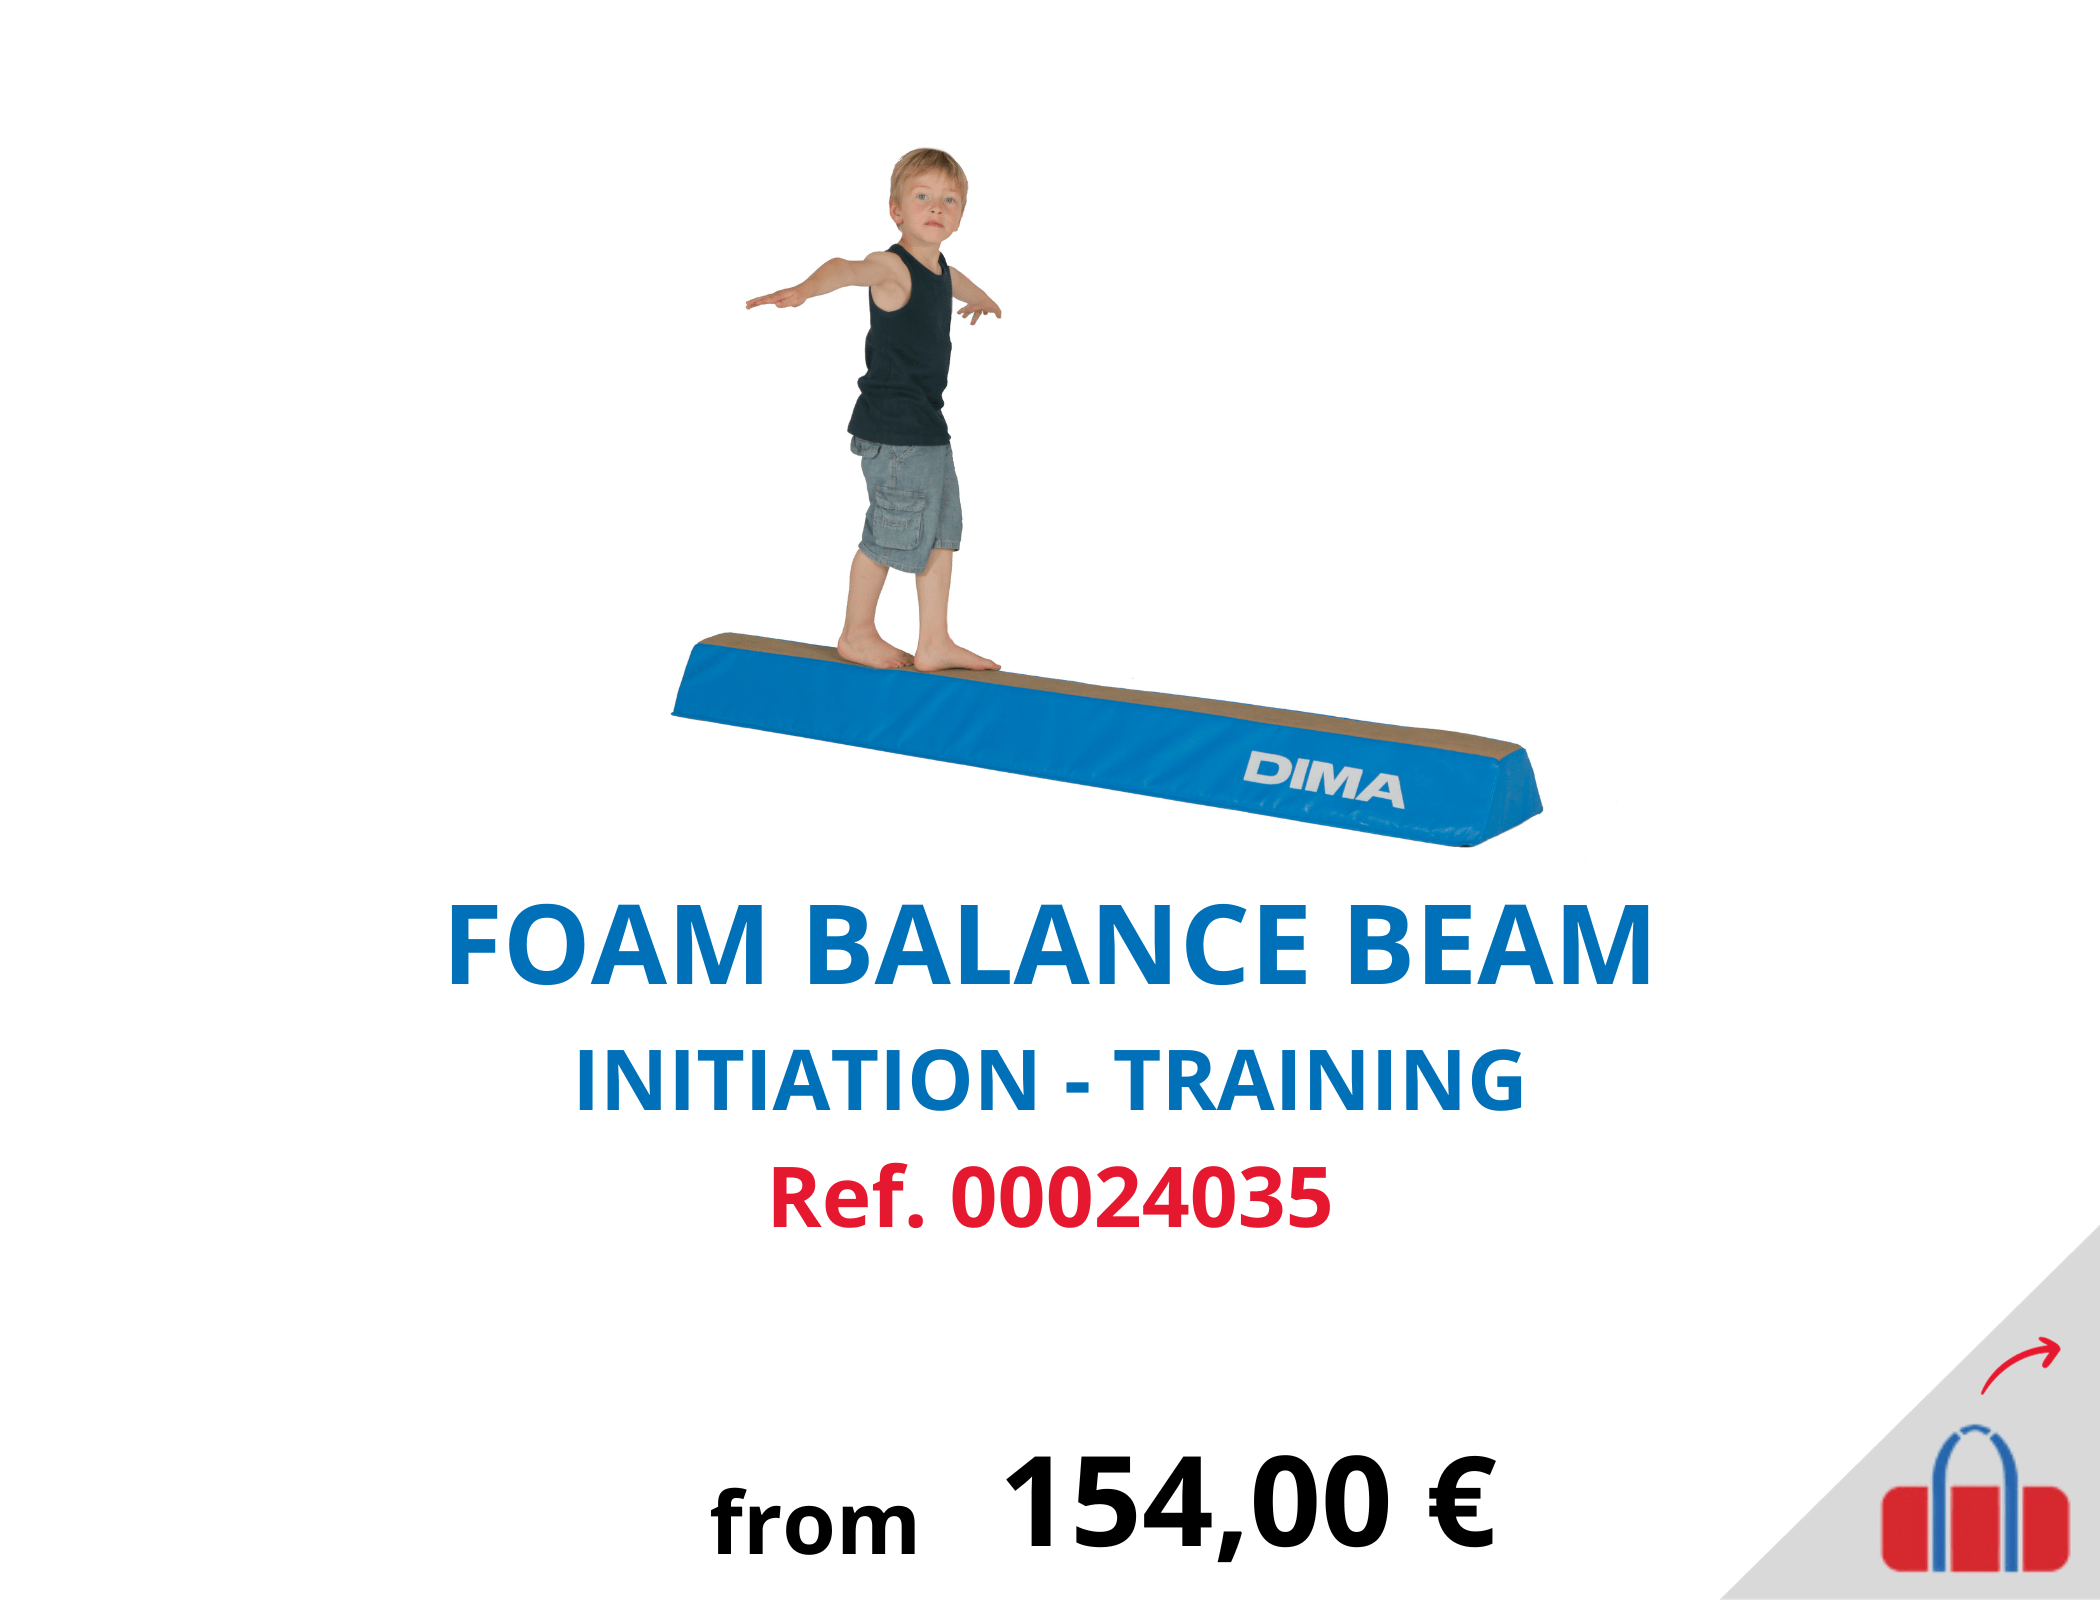 Foam Balance beam